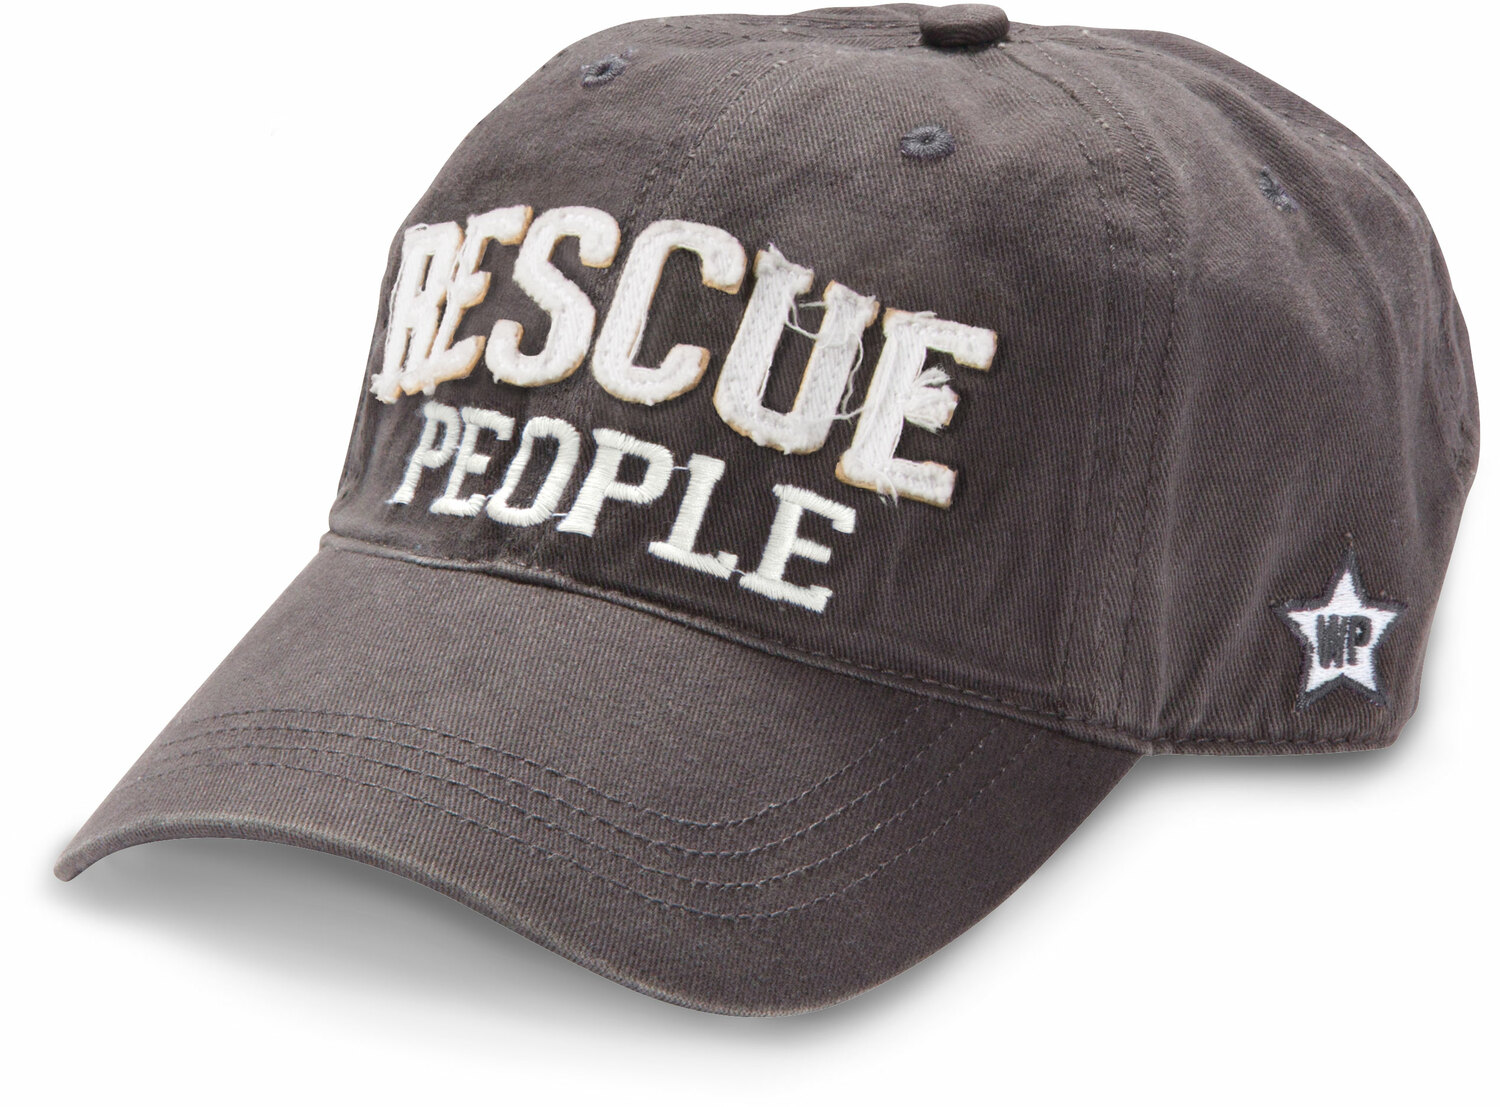 Rescue People by We People - Rescue People - Dark Gray Adjustable Hat